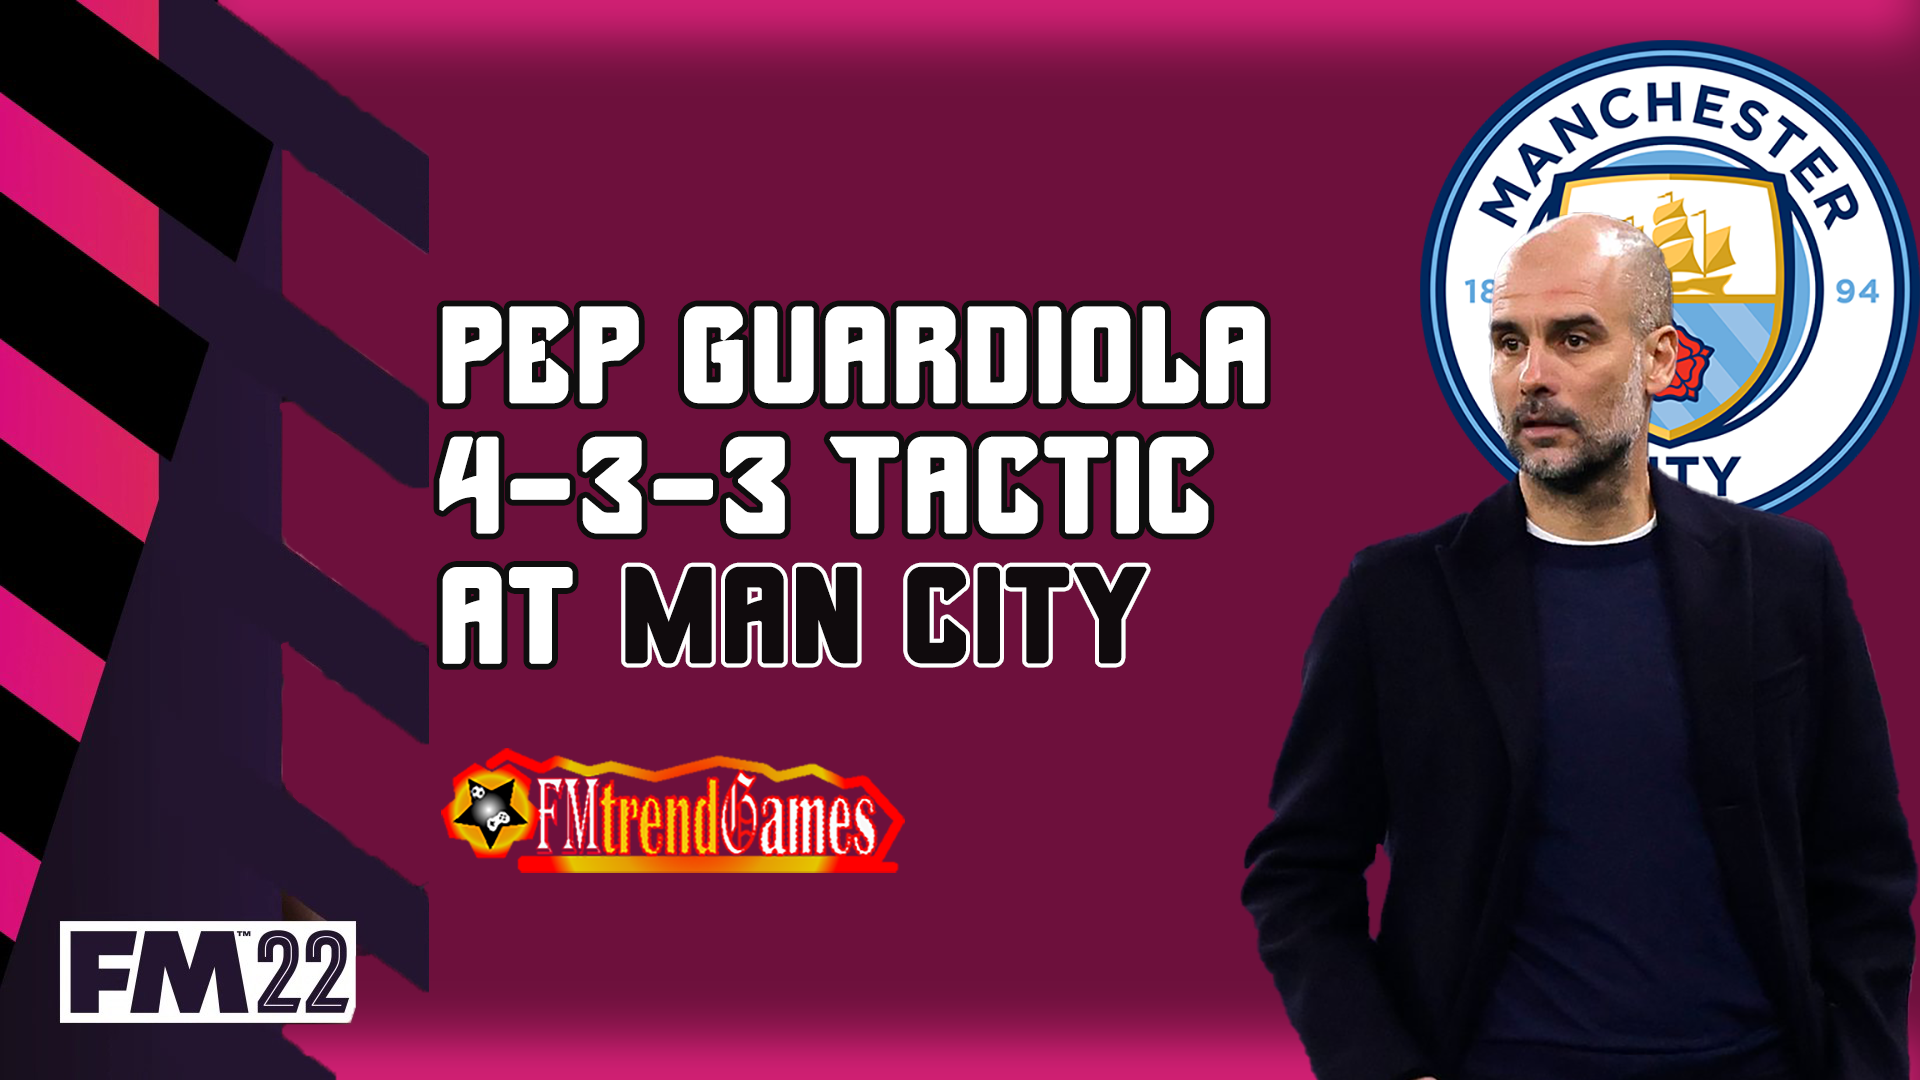 Pepe Guardiola 2022/2023 Man City tactic